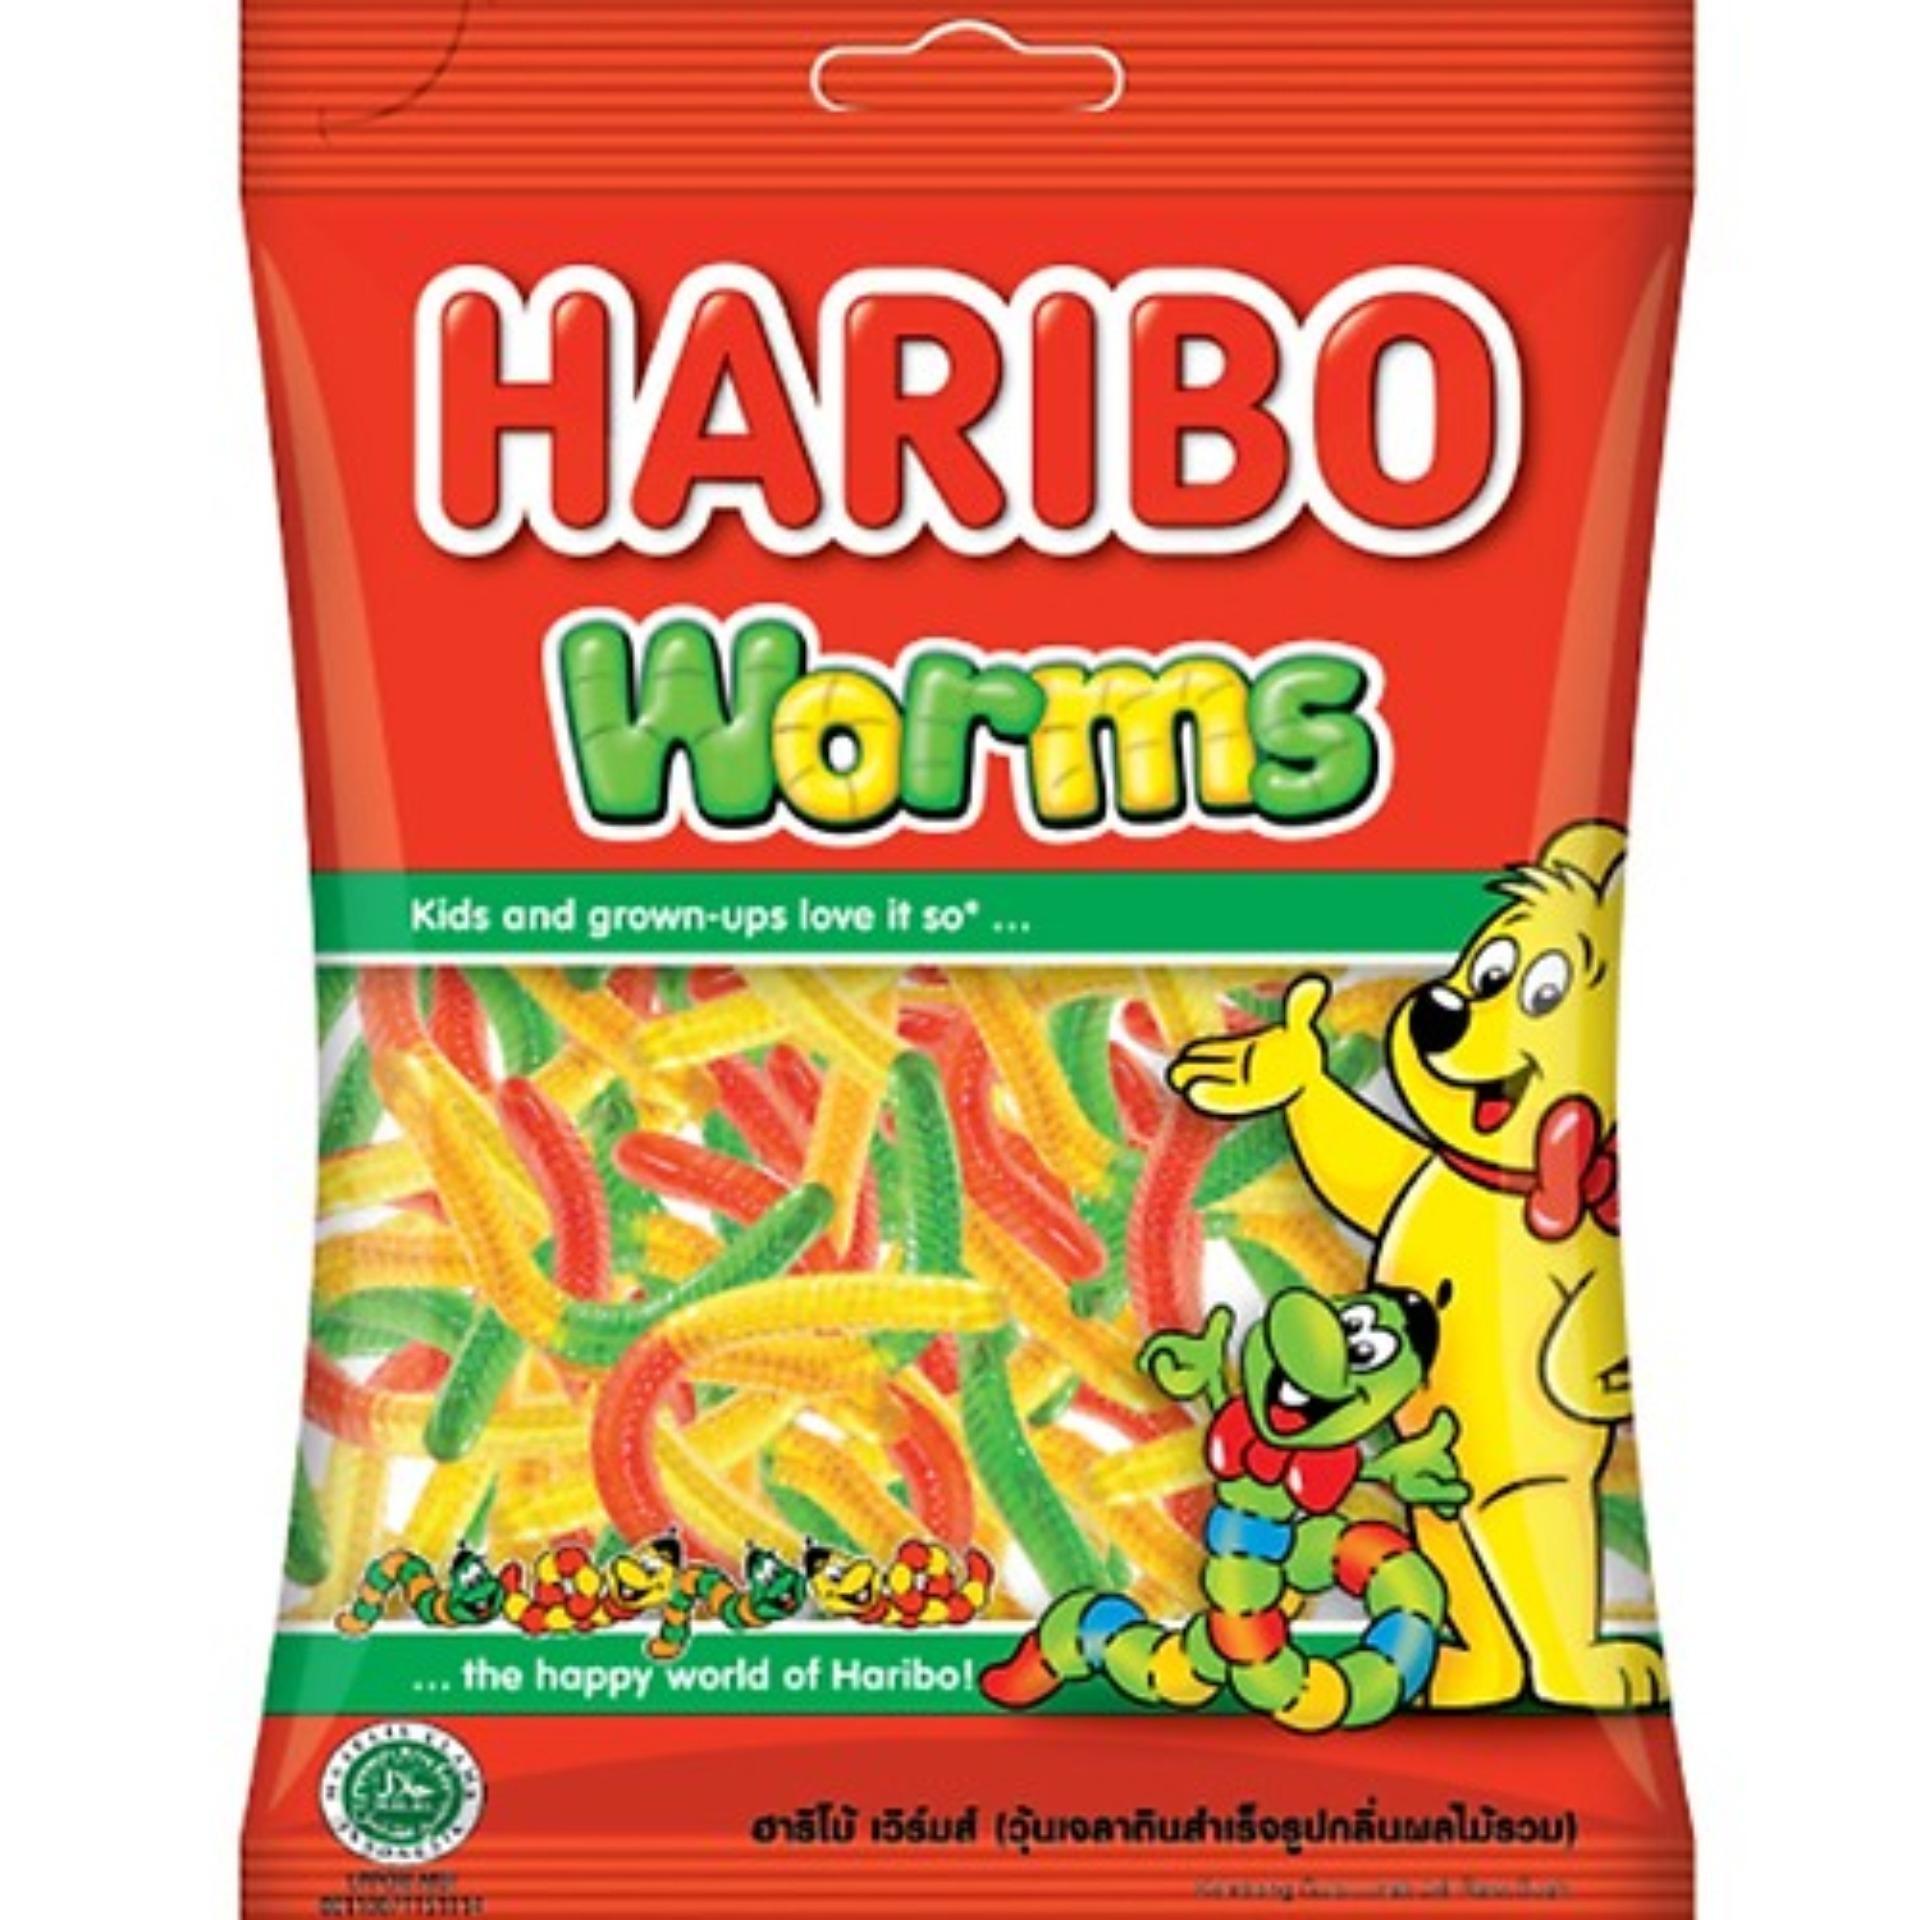 Kẹo dẻo Worms hiệu Haribo 80g